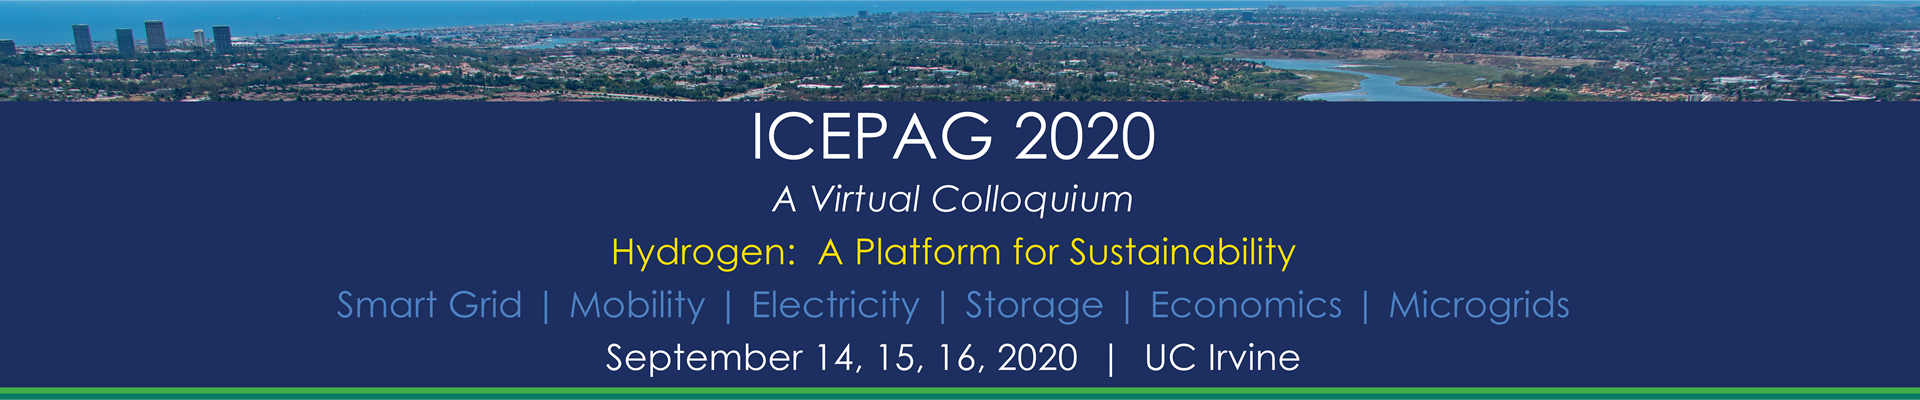 ICEPAG 2020 Hydrogen: A Platform for Sustainability  Header Image